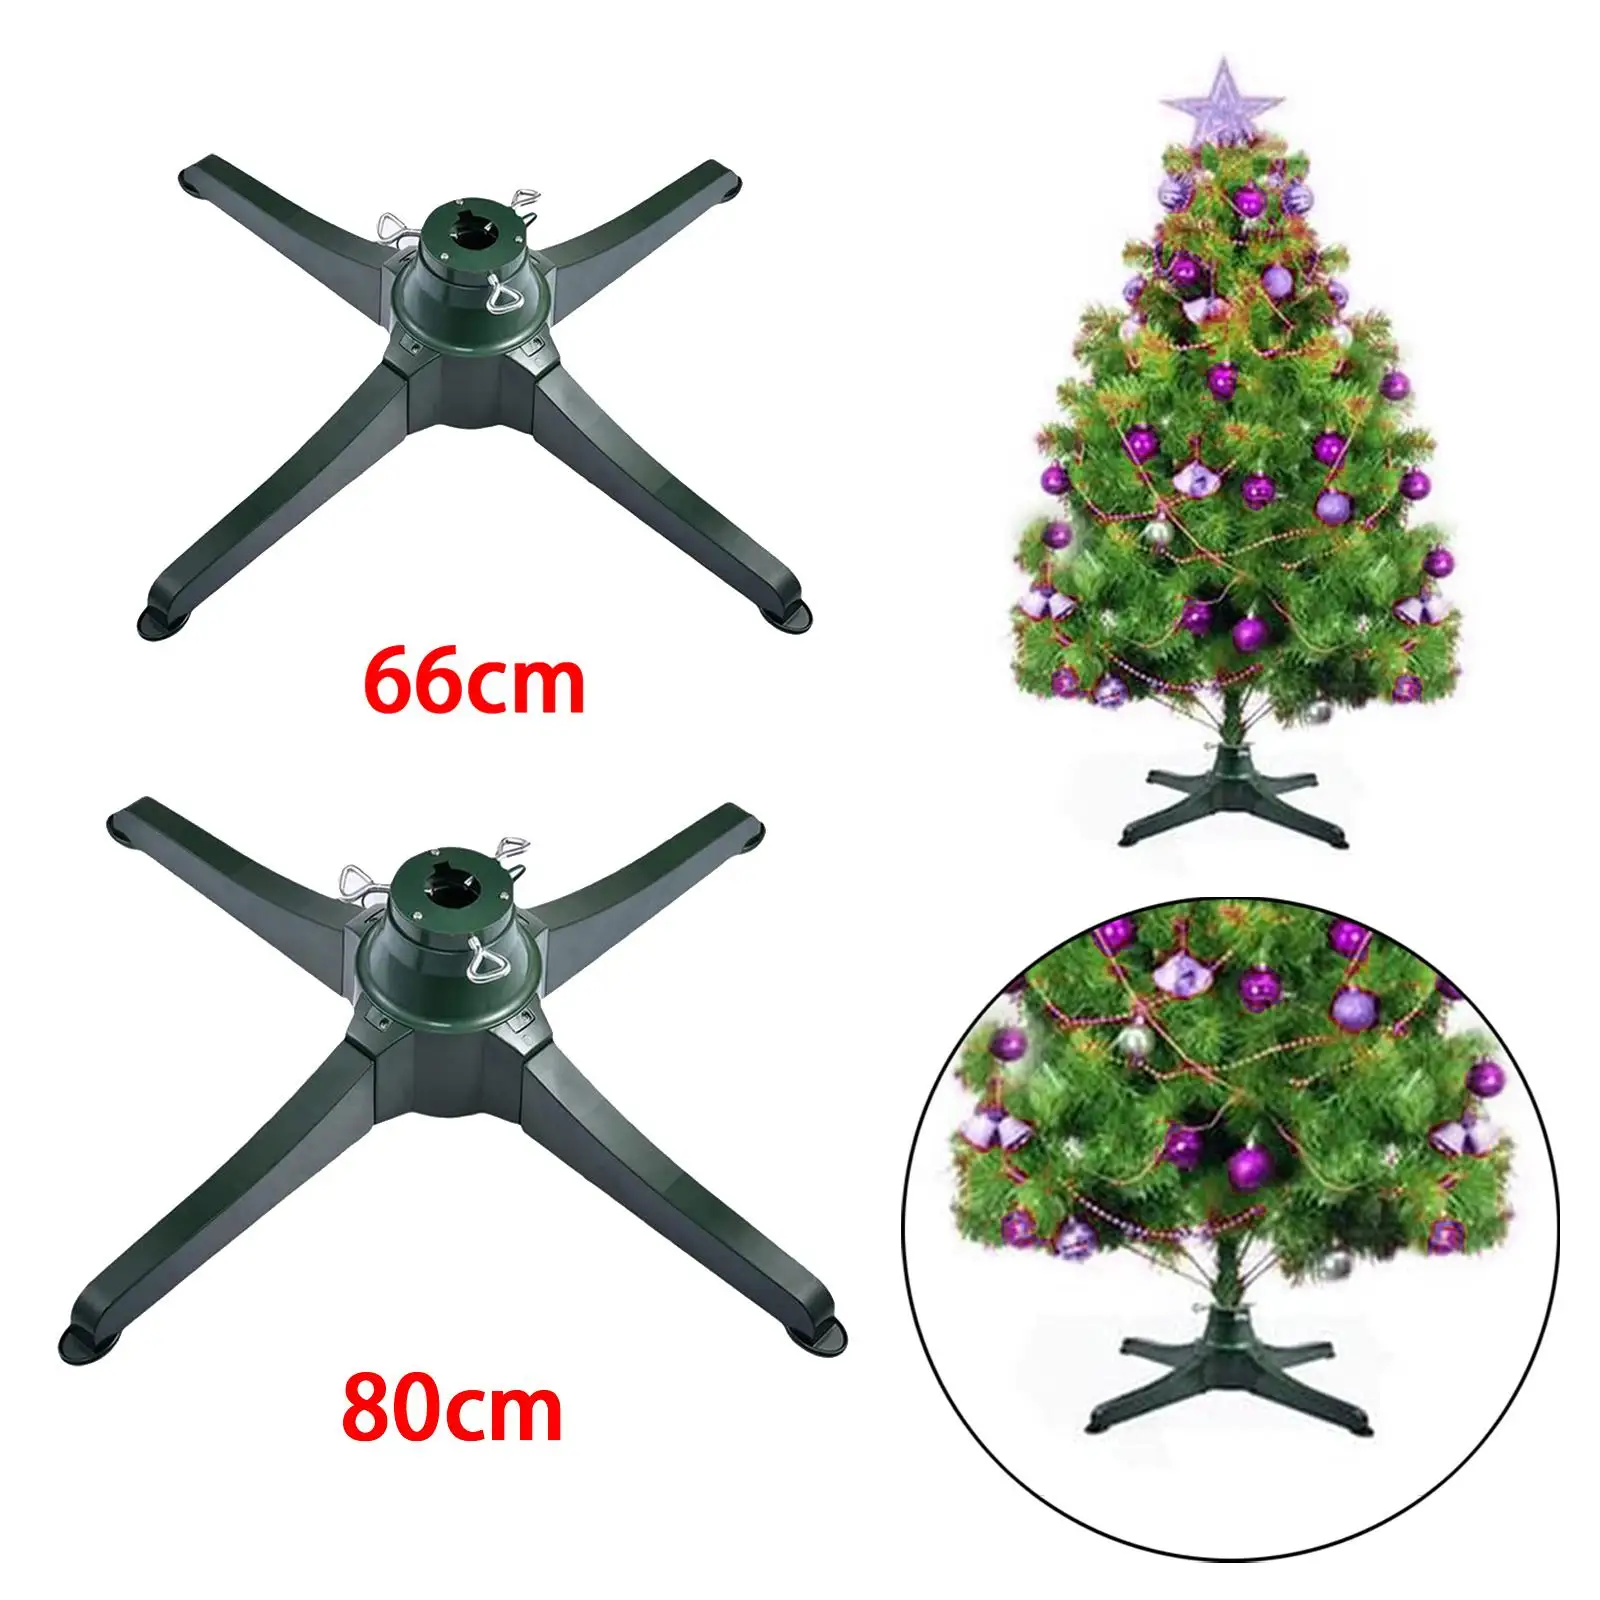 Rotating Christmas Tree Stand Heavyduty Tree Base Holder Bottom Support